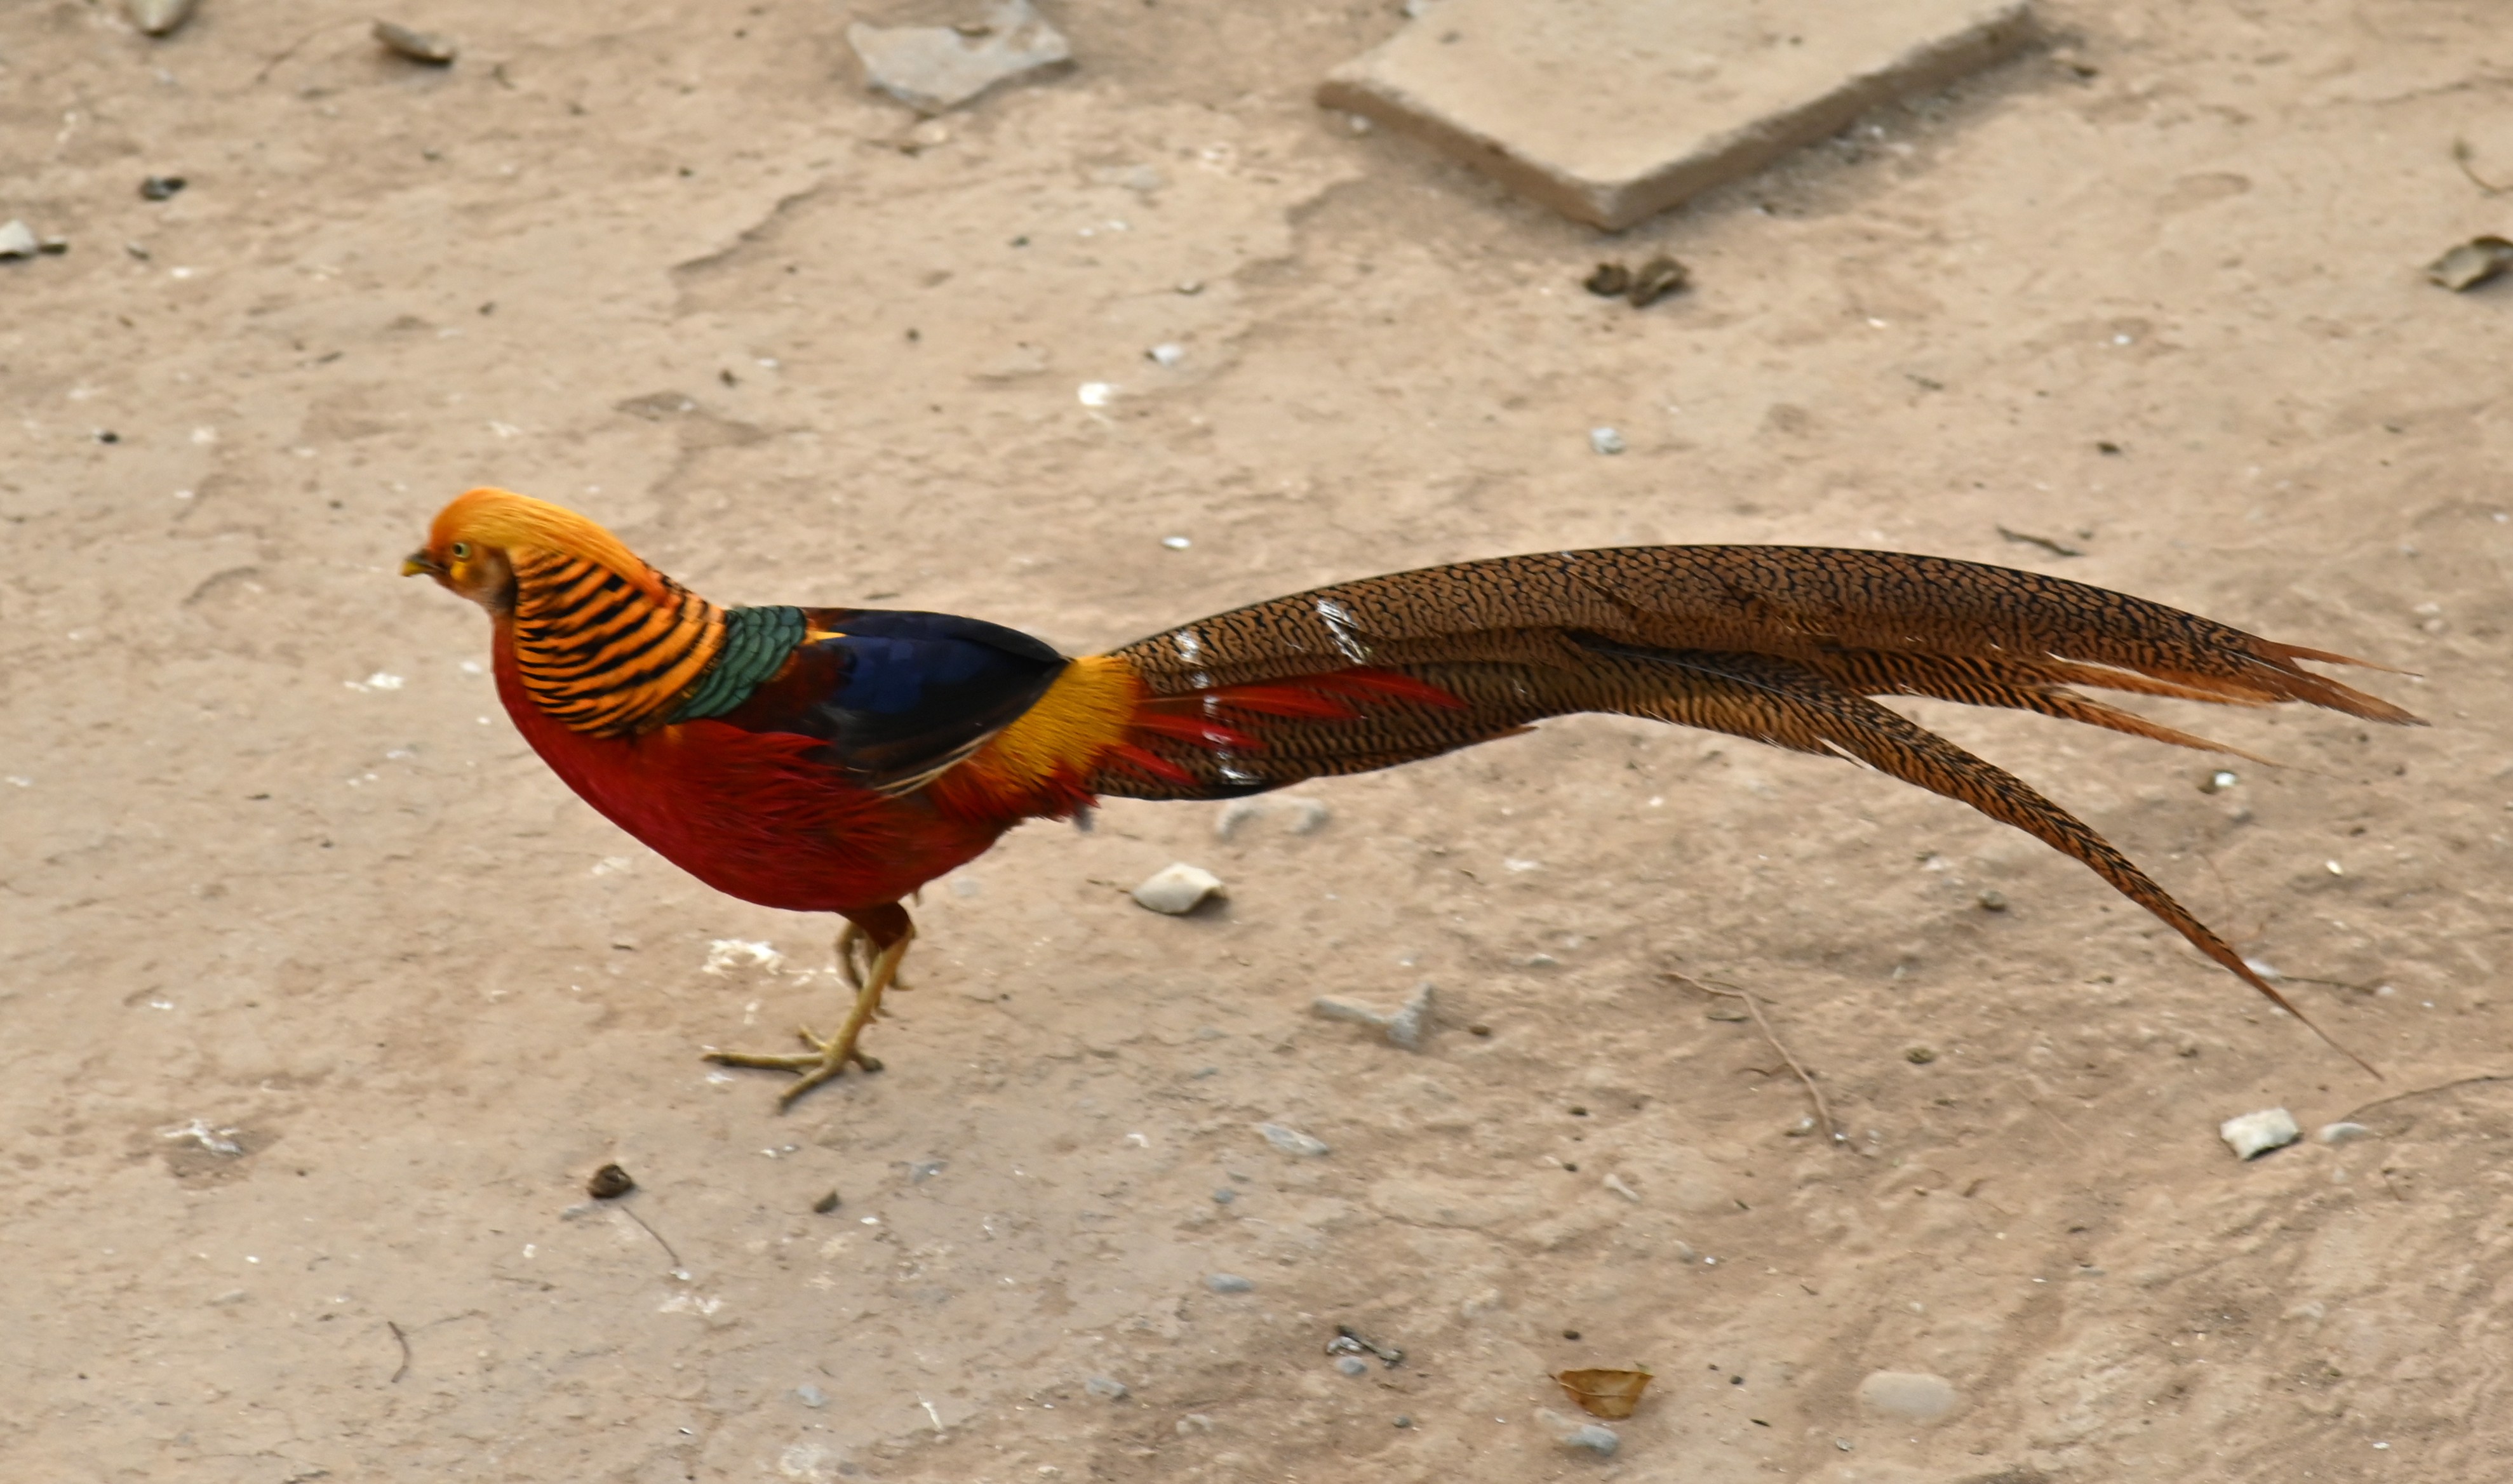 A Golden Pheasant in Birds Aviary